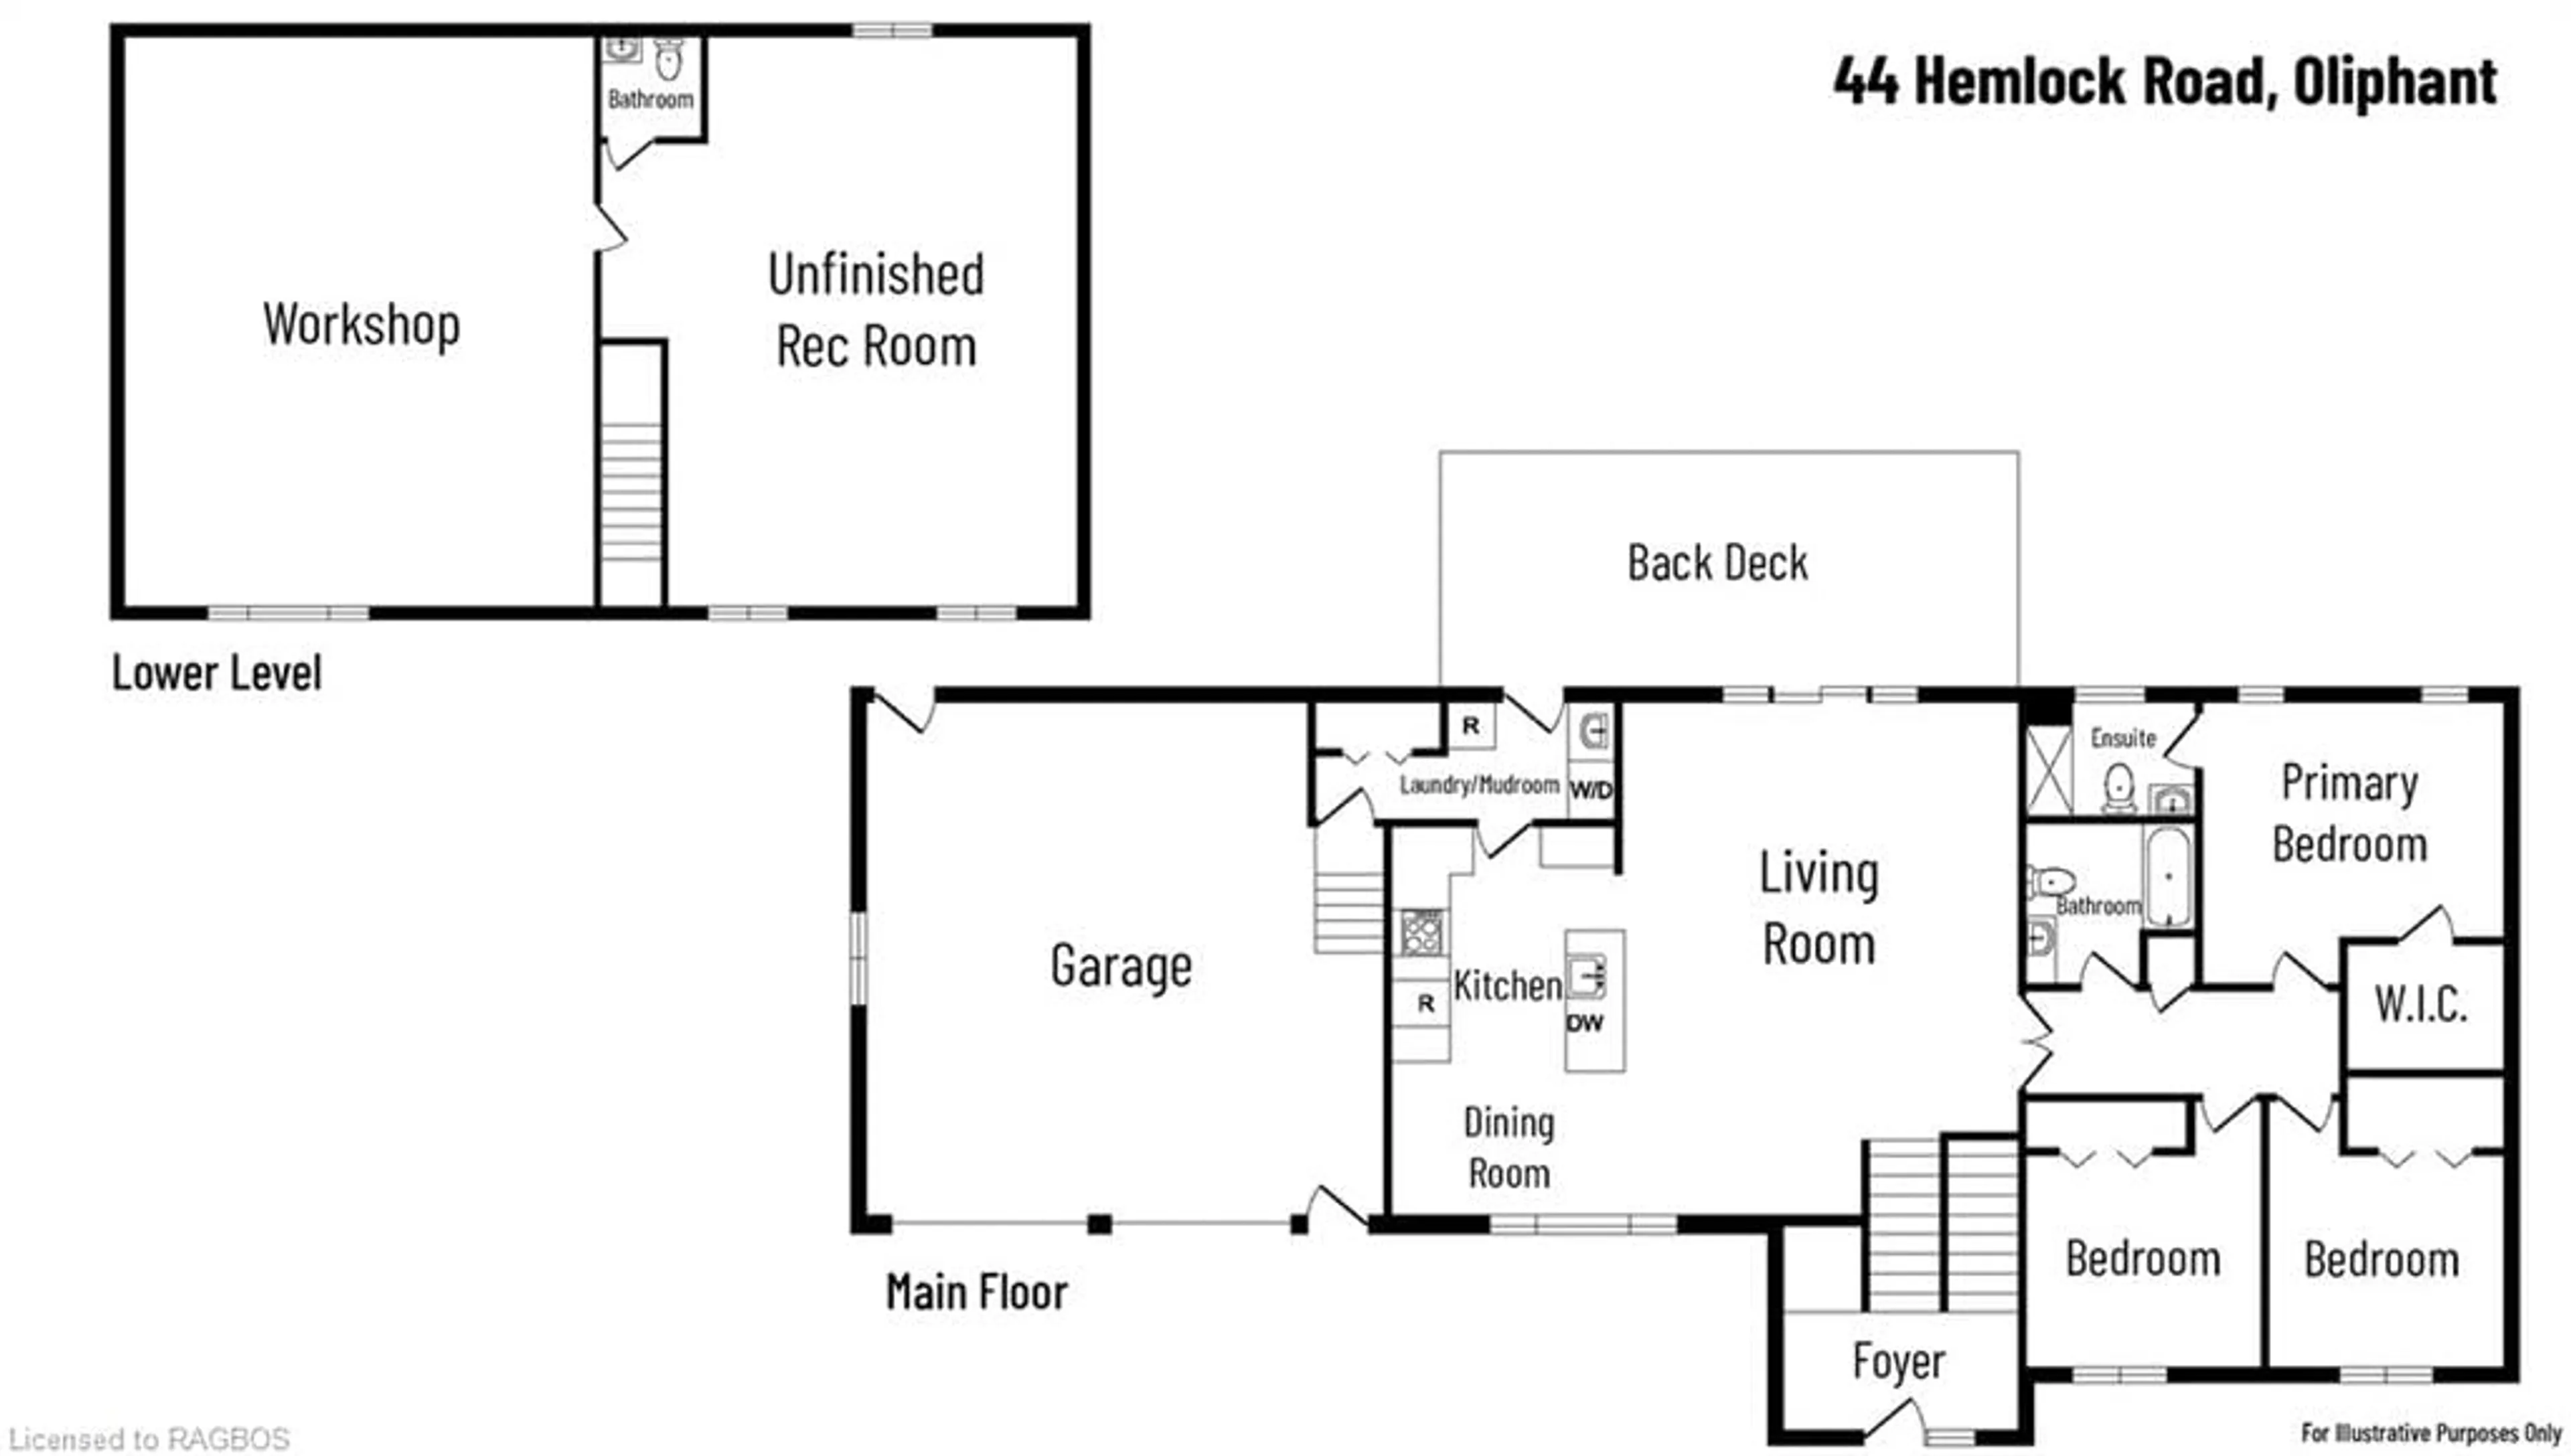 Floor plan for 44 Hemlock Rd, South Bruce Peninsula Ontario N0H 2T0